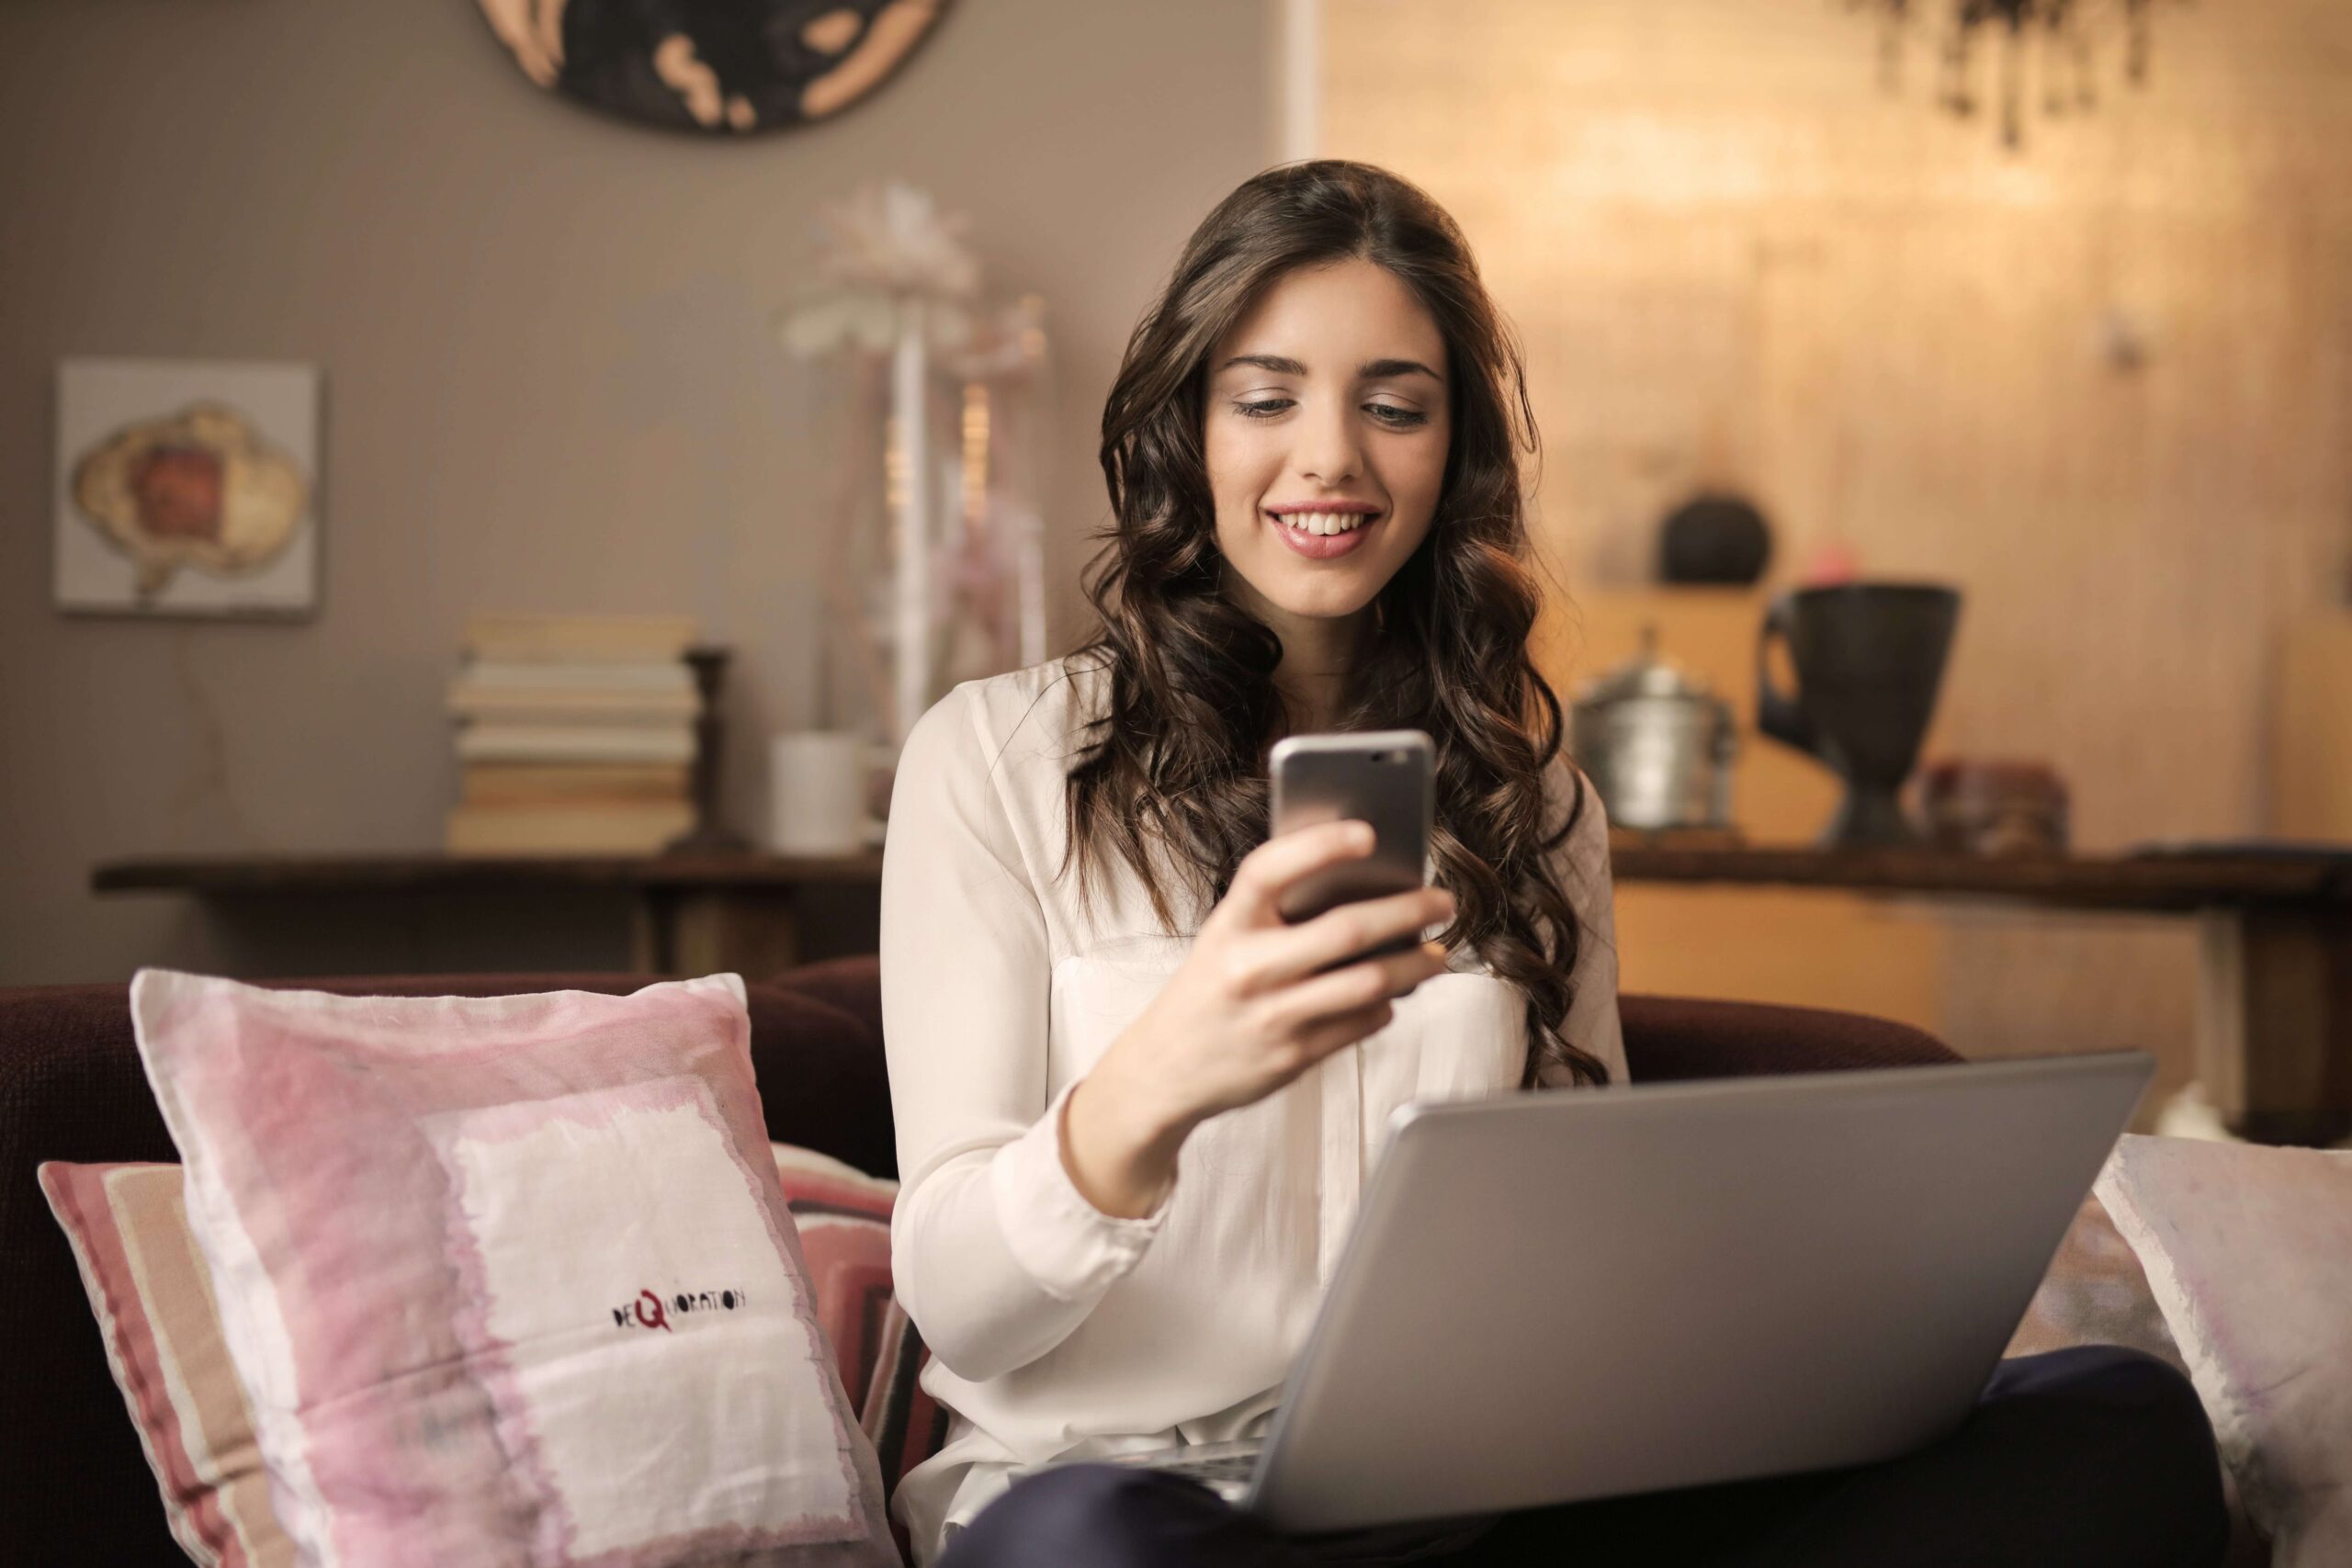 Webcam Girls: Monetising Online Content